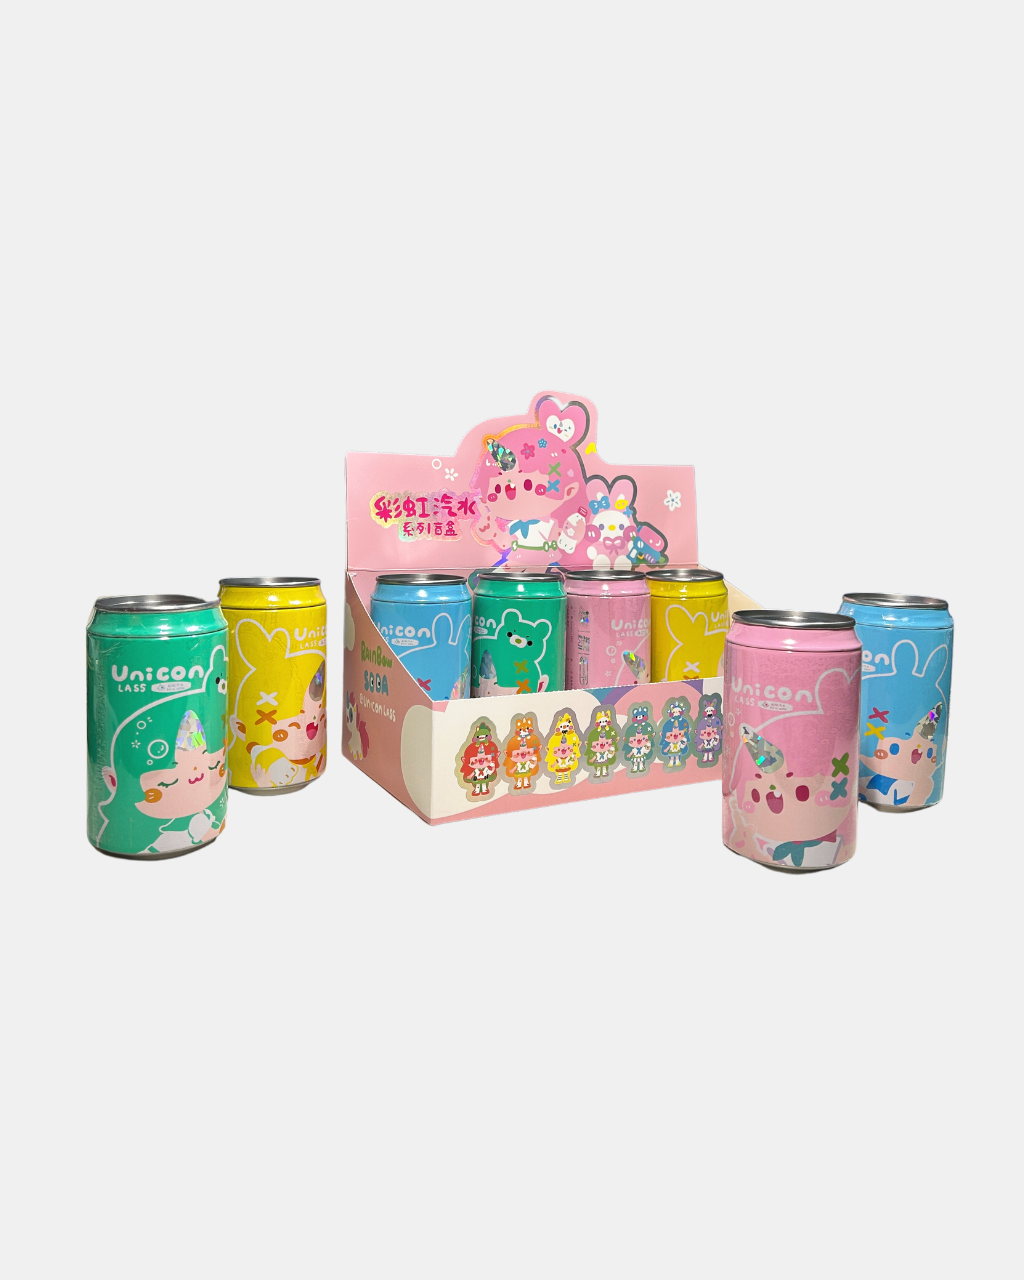 Unicorn Rainbow Soda - Blind Box - Collect & Display - Largest ...